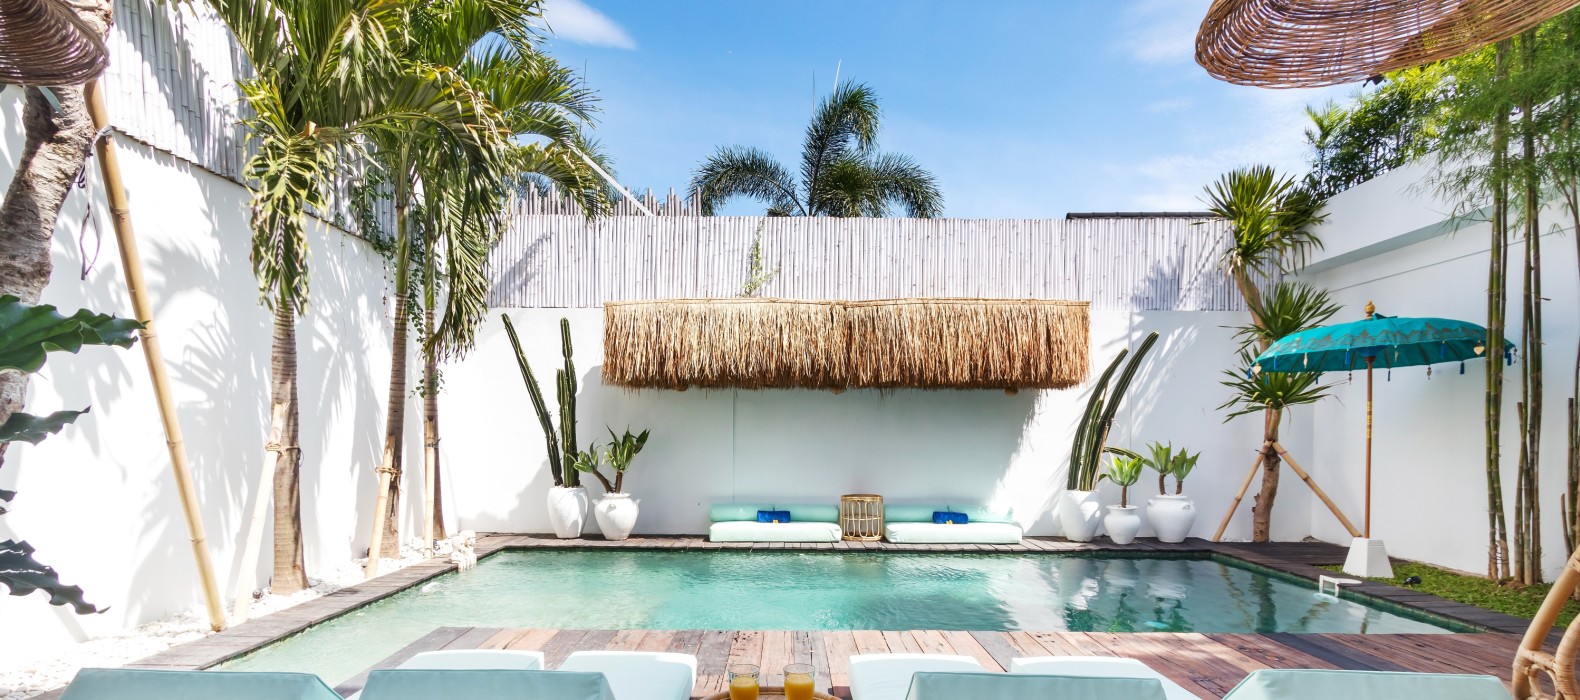 Exterior pool view of Villa Metisse in Bali